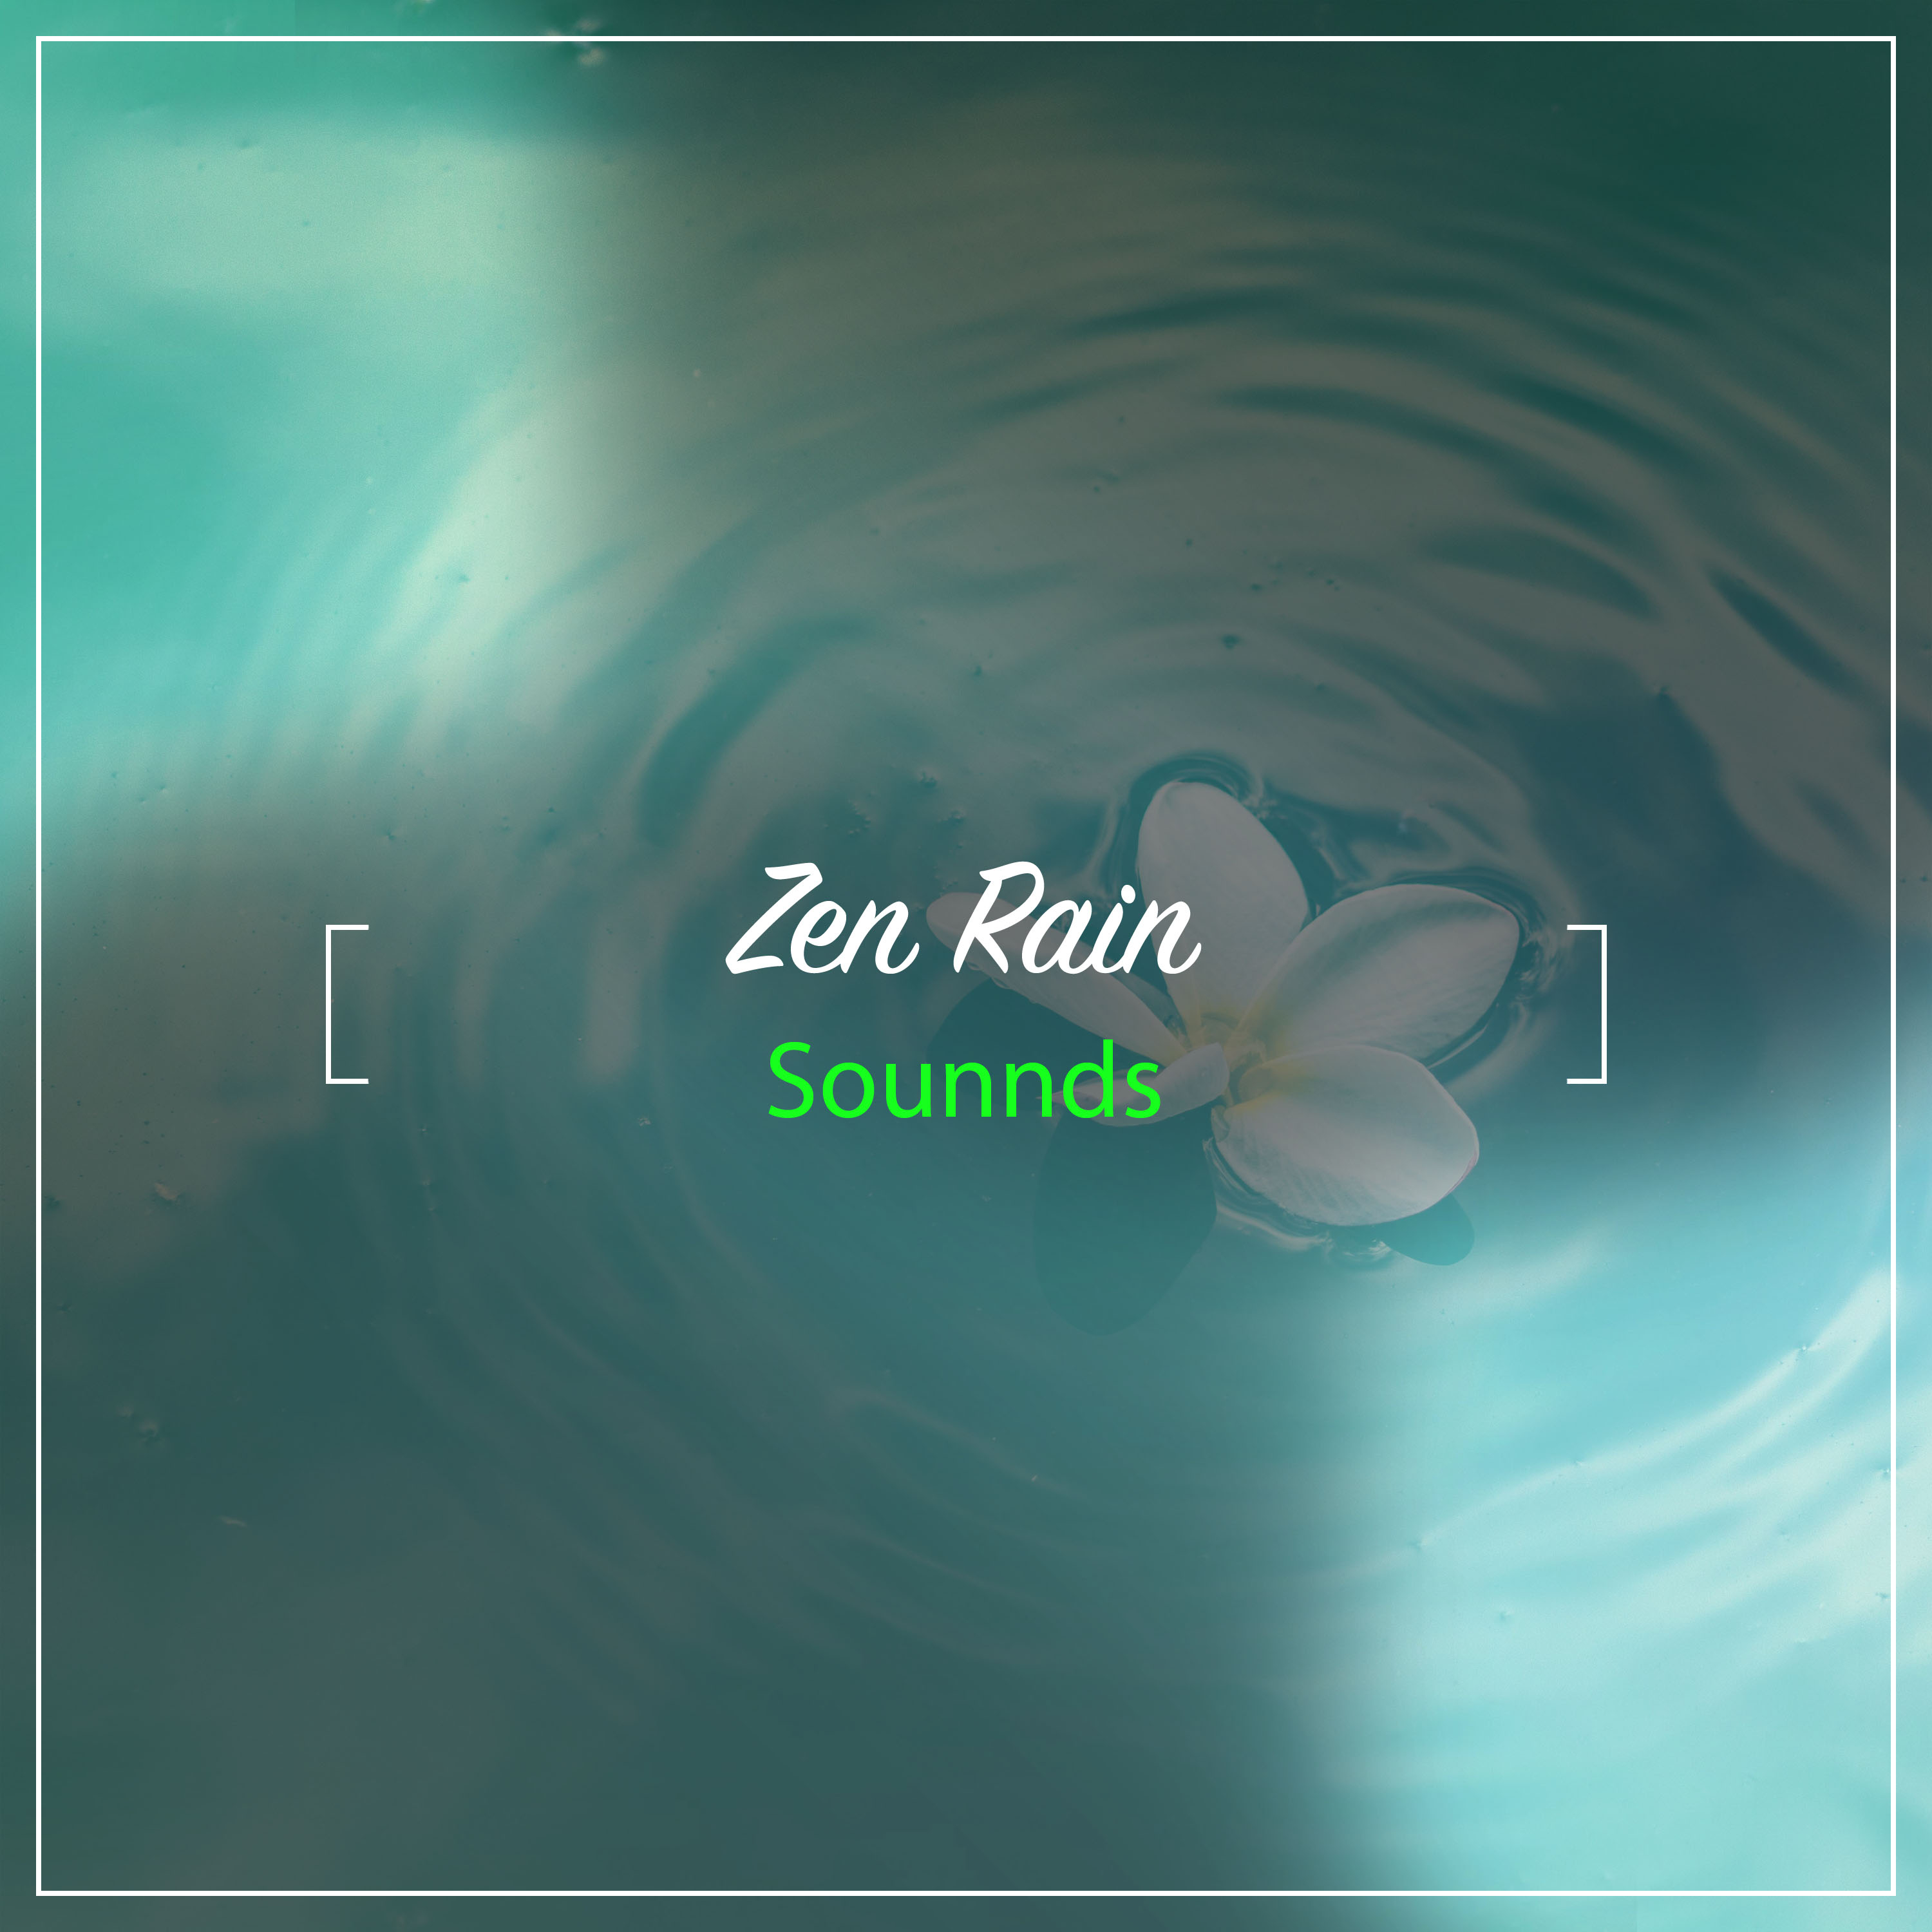 17 Zen Rain Sounds for Mindfulness